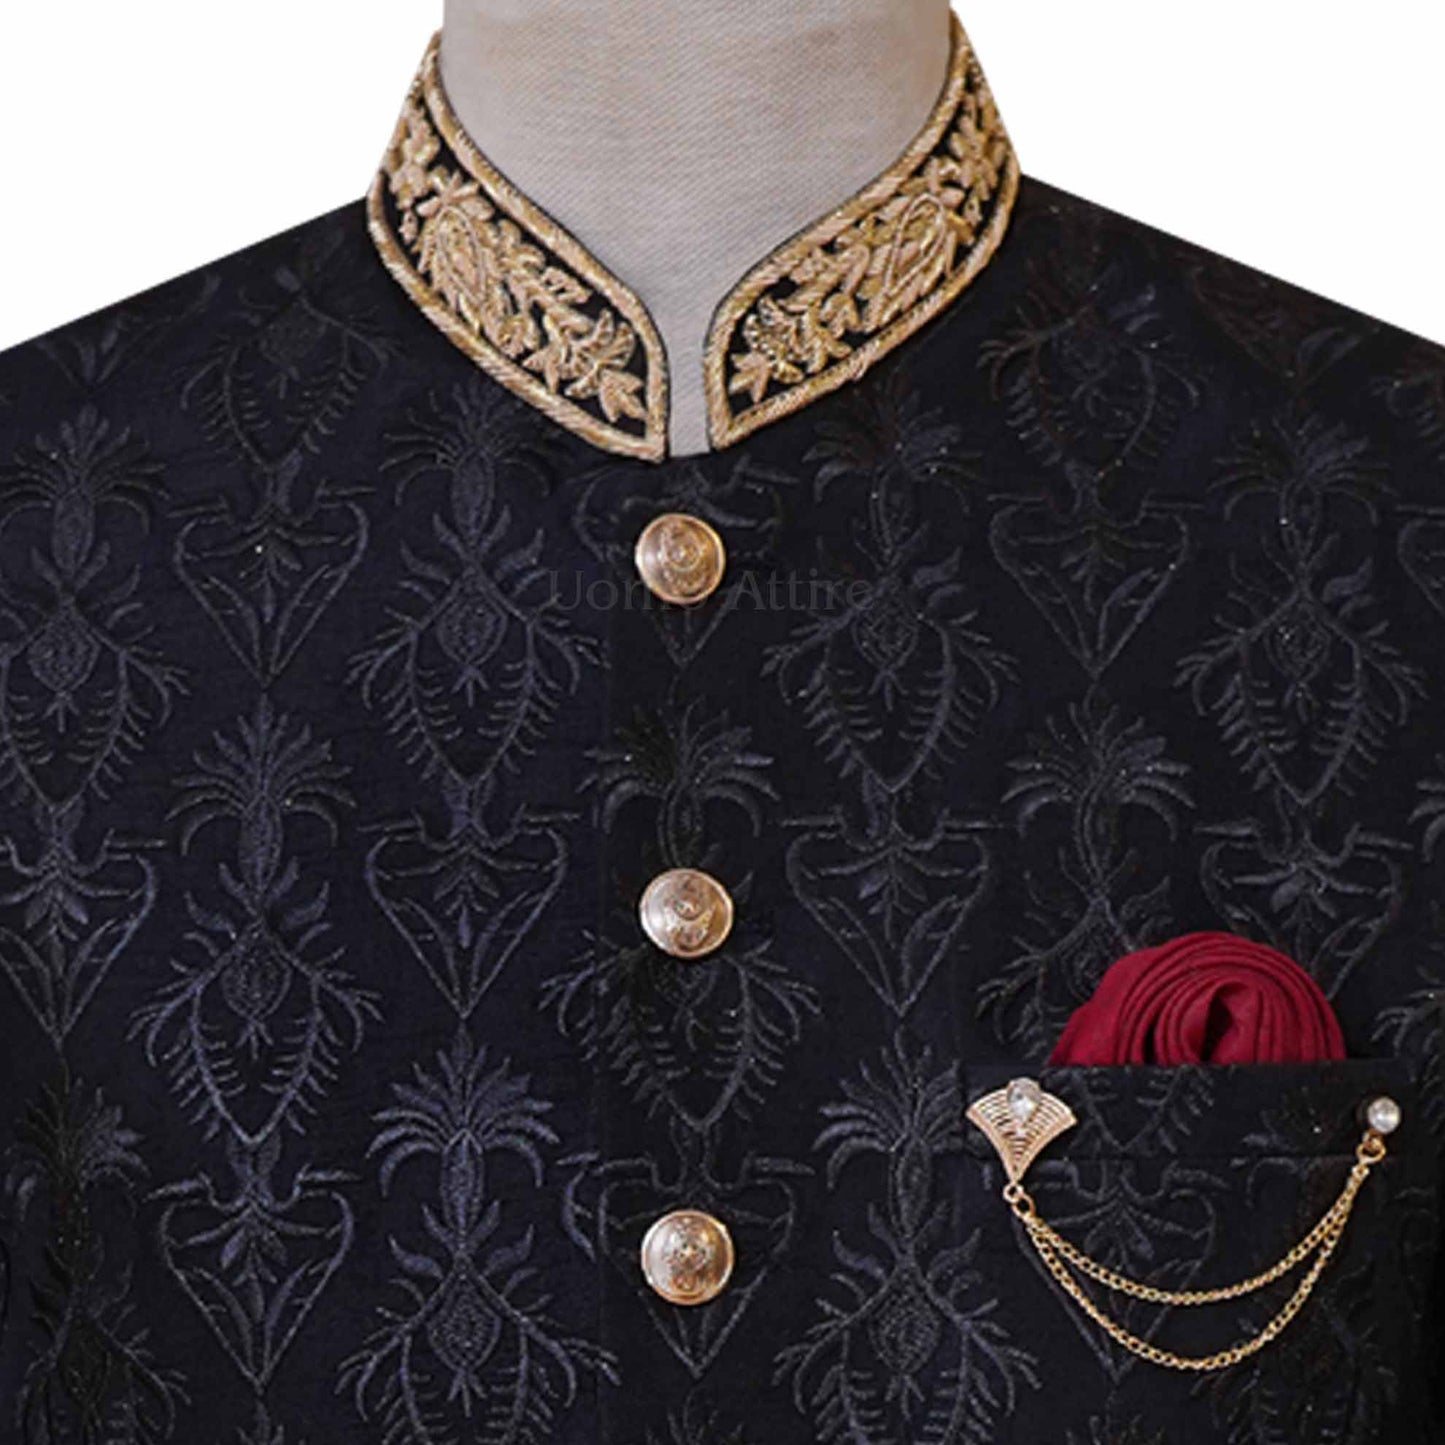 
                  
                    Black prince coat with golden embellishments | Black prince coat for groom 4
                  
                